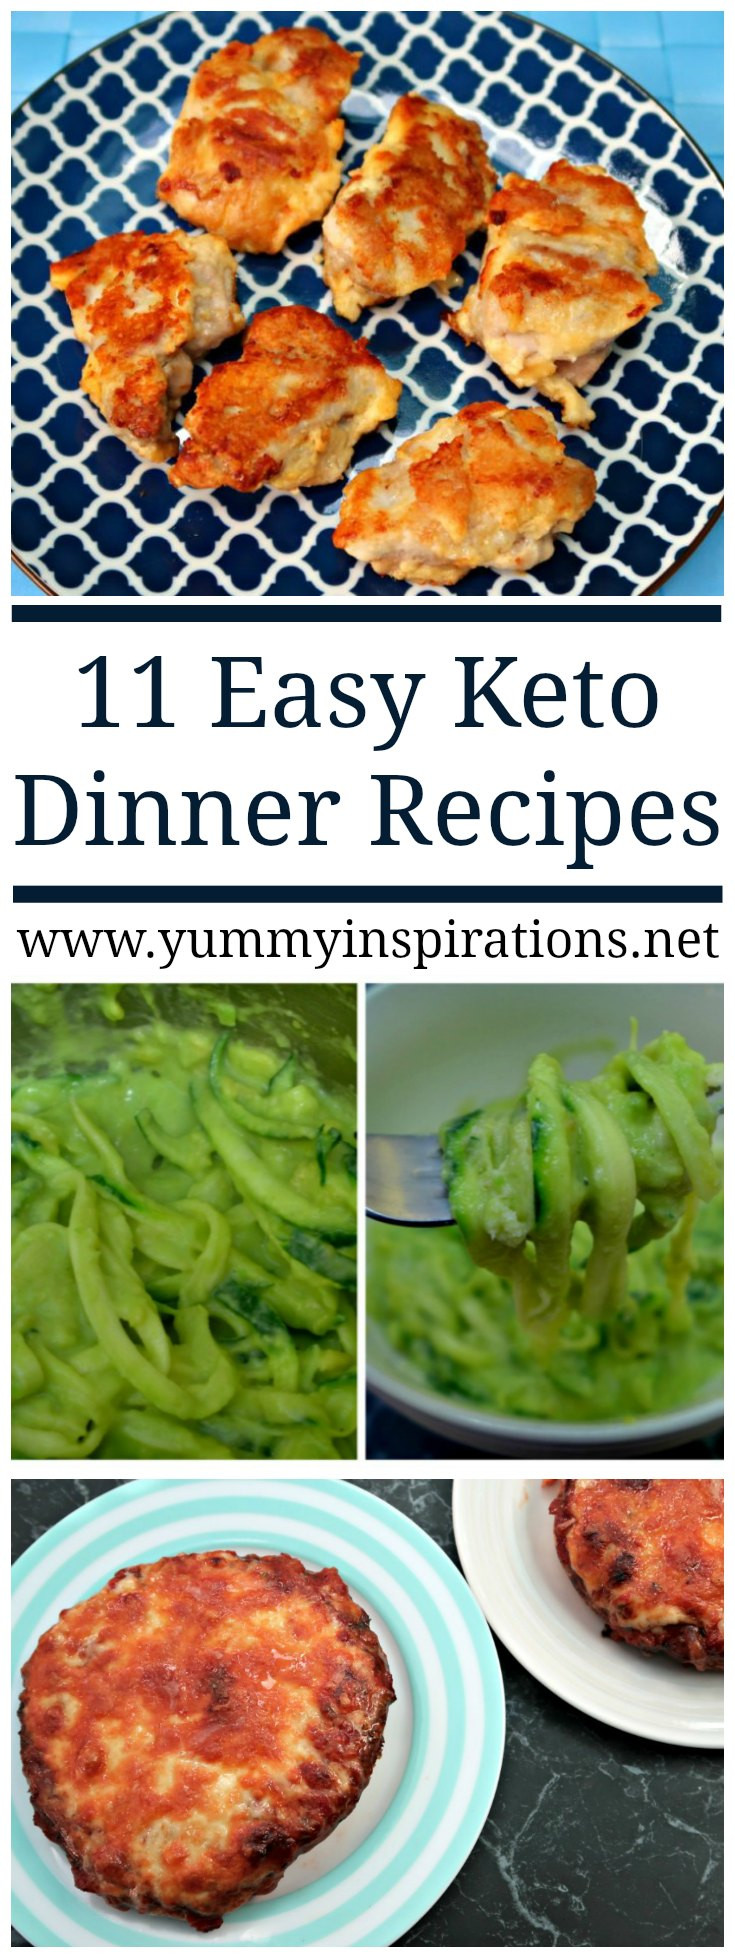 Keto Dinner Recipes
 11 Easy Keto Dinner Recipes Quick Low Carb Ketogenic